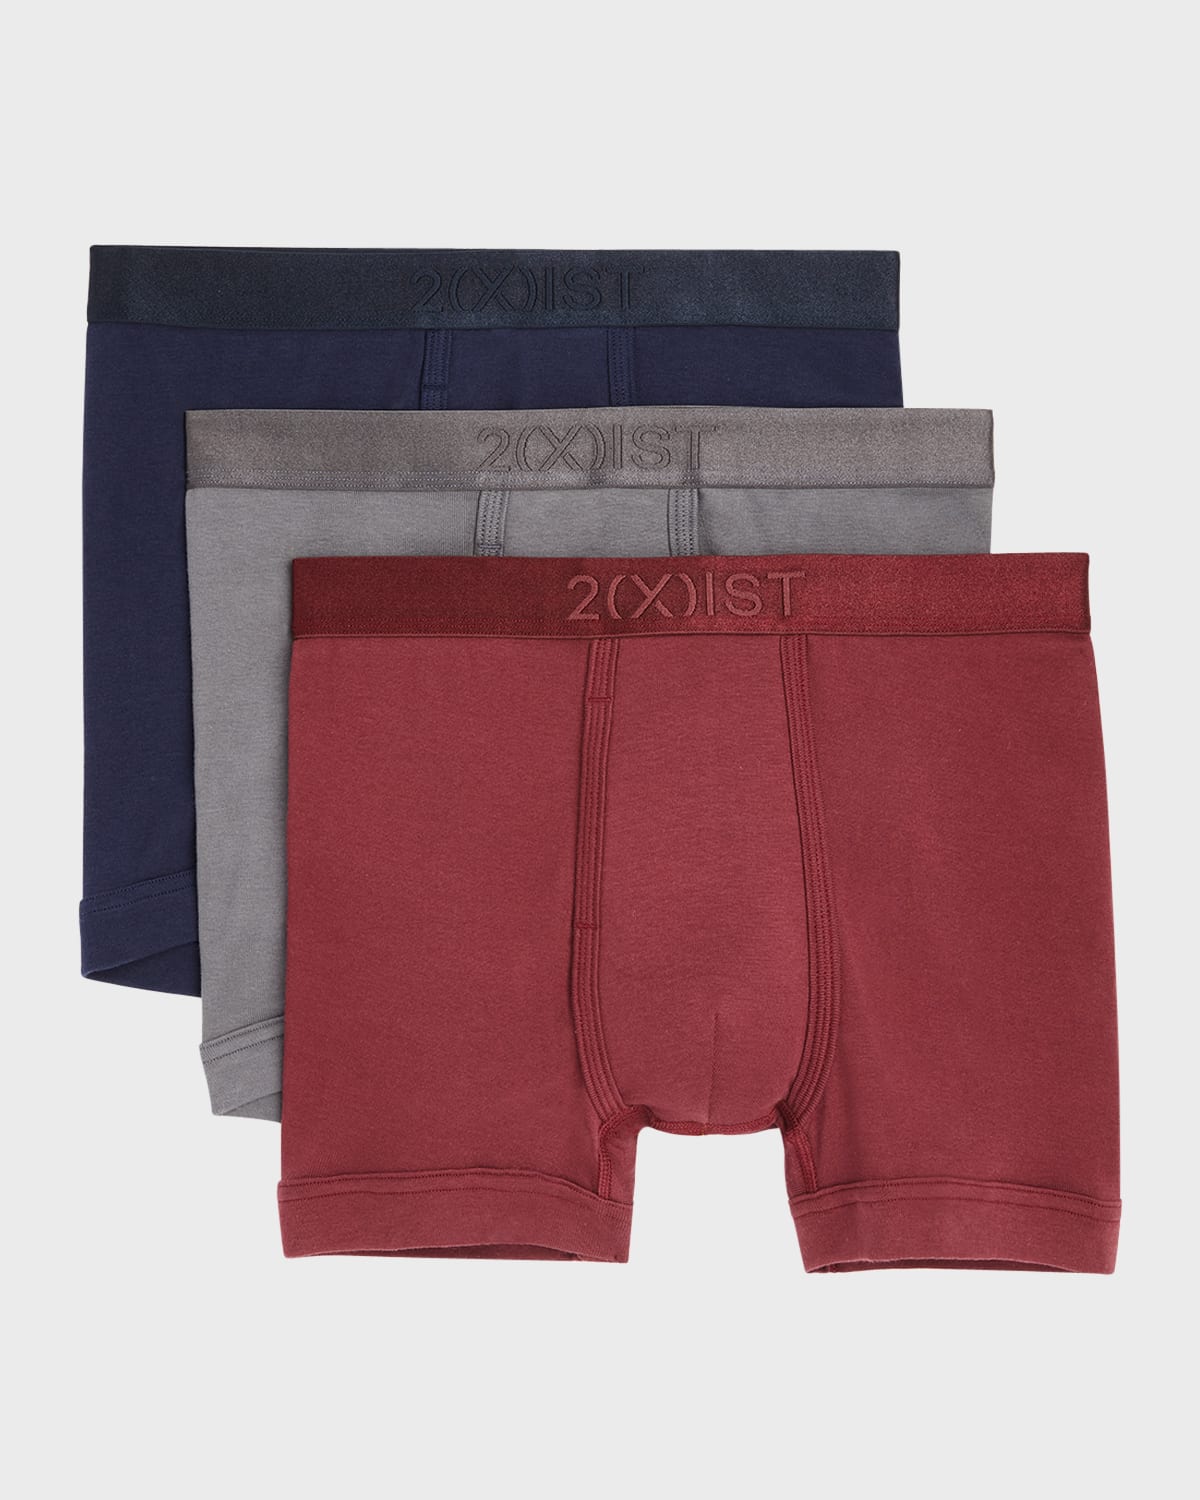 DongDongQiang USA Tesax State Flag Mens Boxer Briefs Underwear